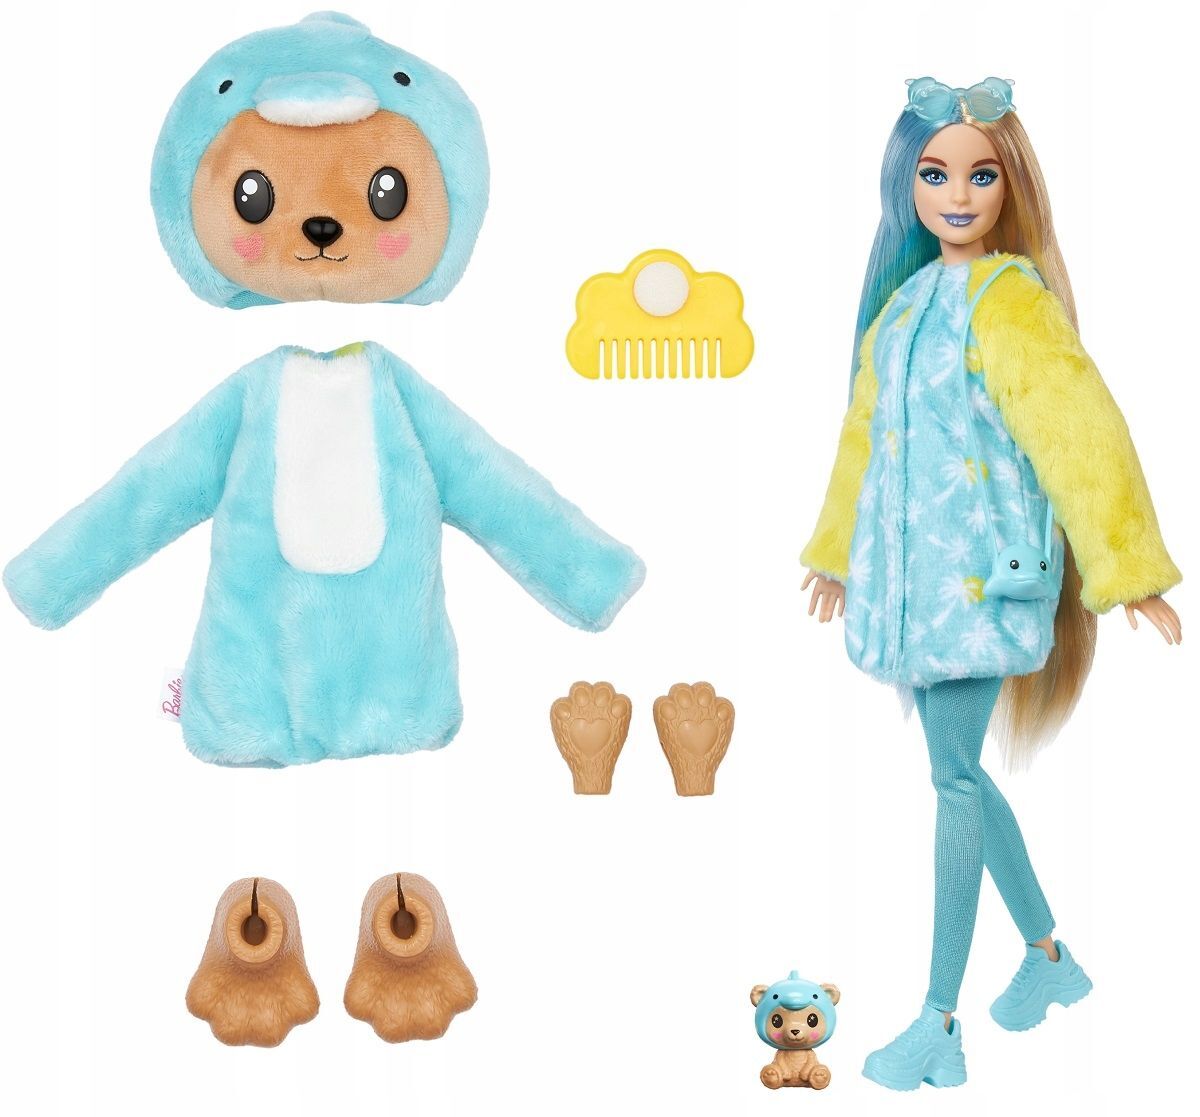 Кукла Barbie Cutie Reveal Dolphin Bear Плюшевый мишка в образе дельфина, HRK25 кукла mattel barbie cutie reveal челси тукан hkr16